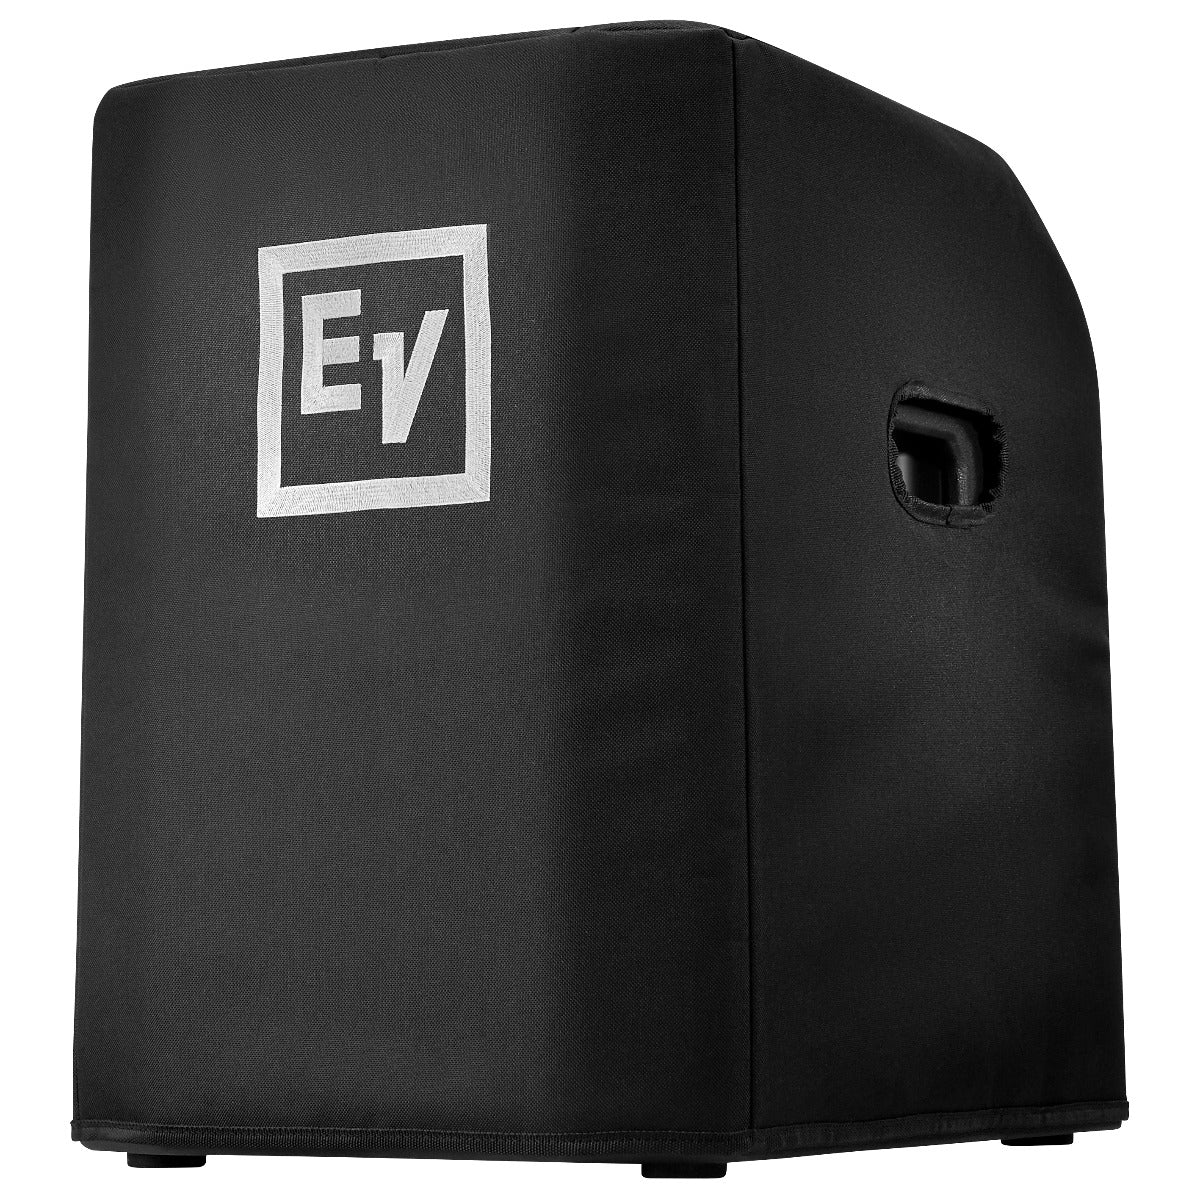 Electro-Voice  Padded Speaker Cover for EVOLVE 50 Subwoofer